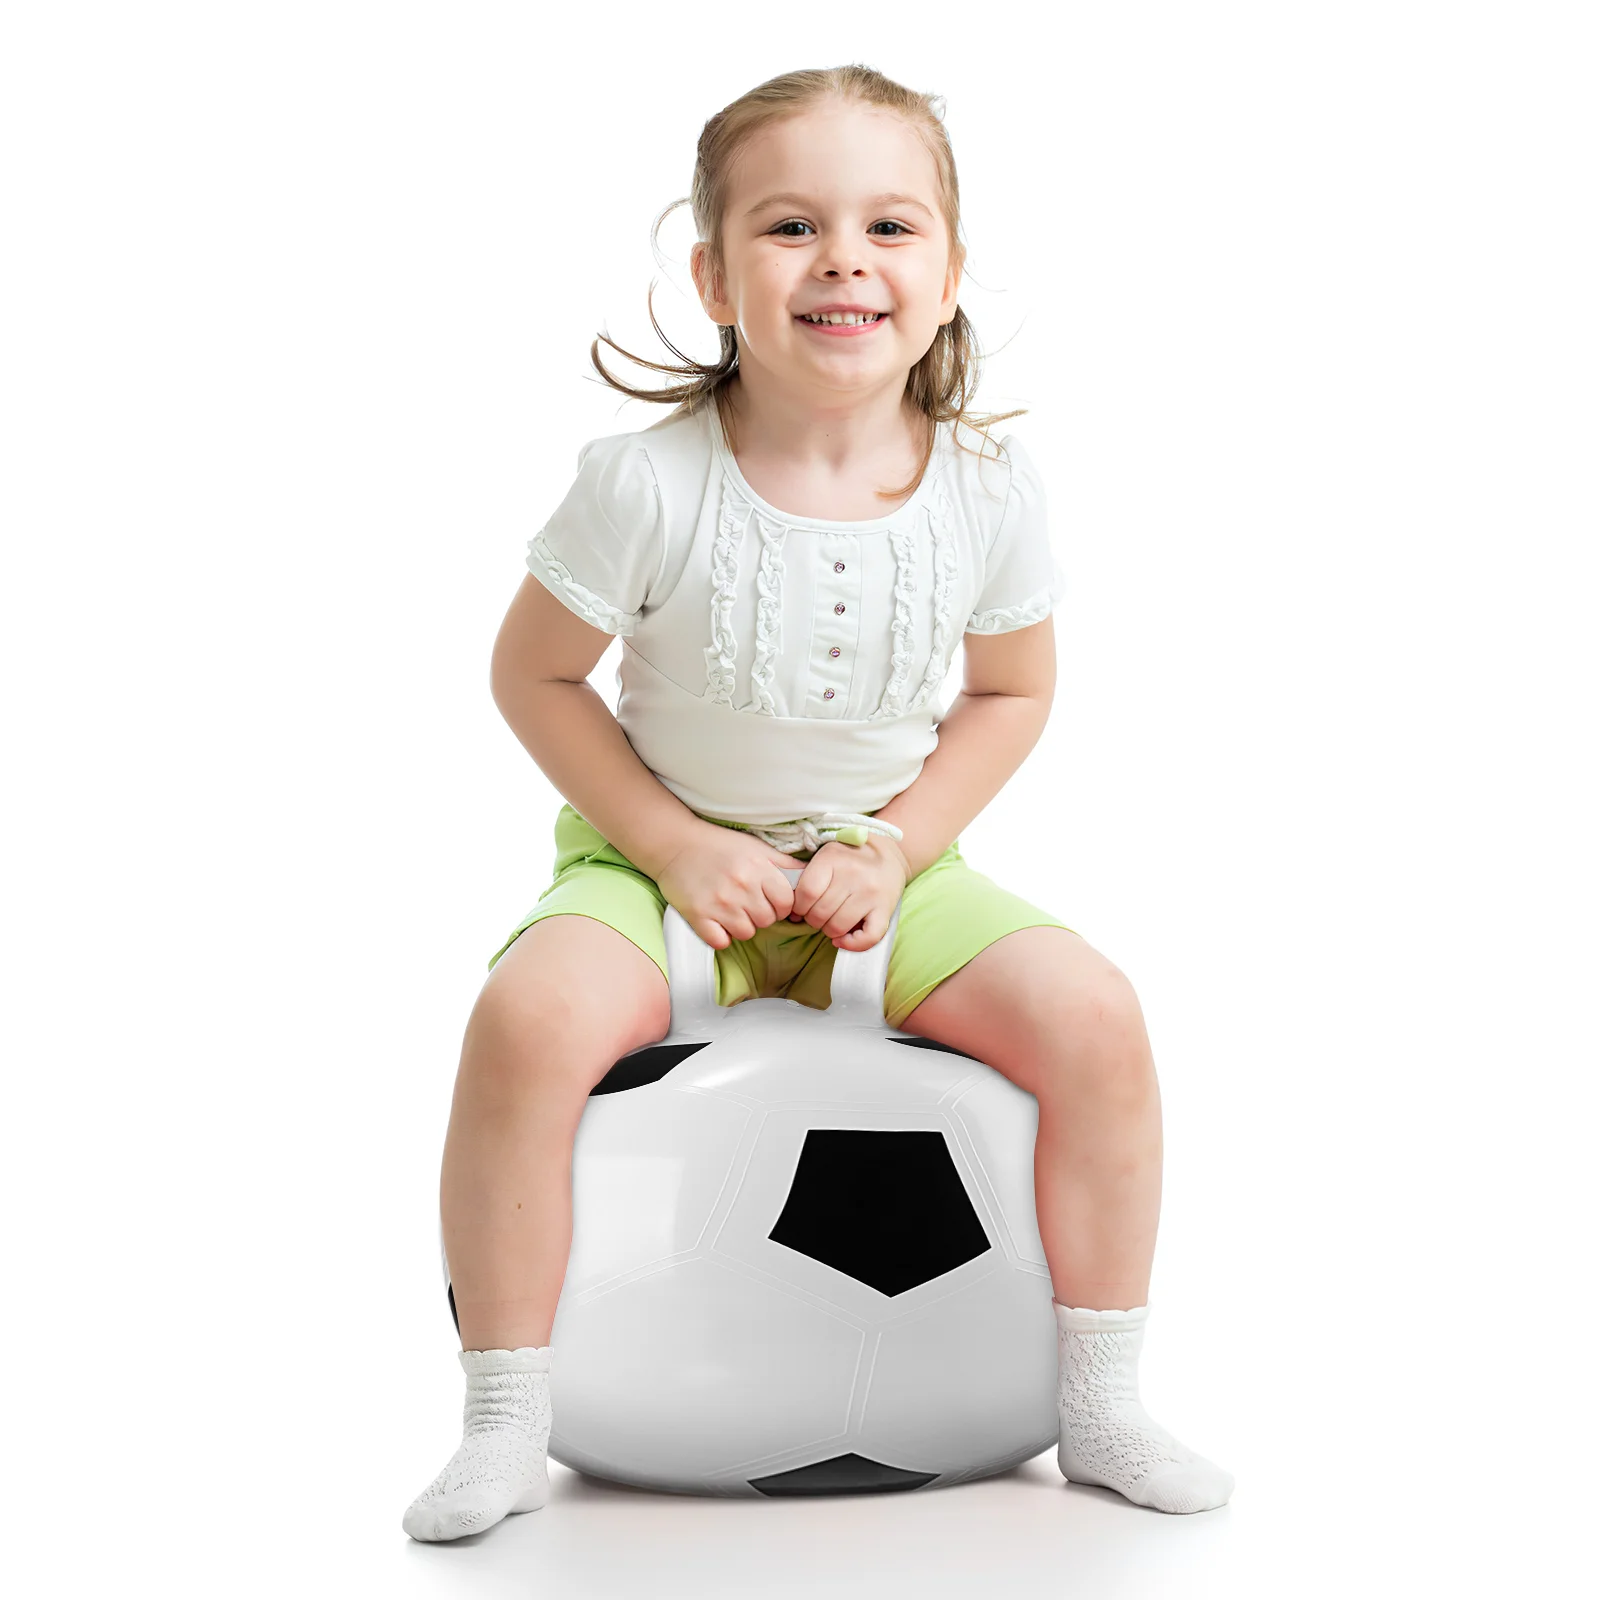 

STOBOK 45cm Inflatable Bouncing Ball Hopping Jumping Ball for Children Hopper Ball with Handle Jumper